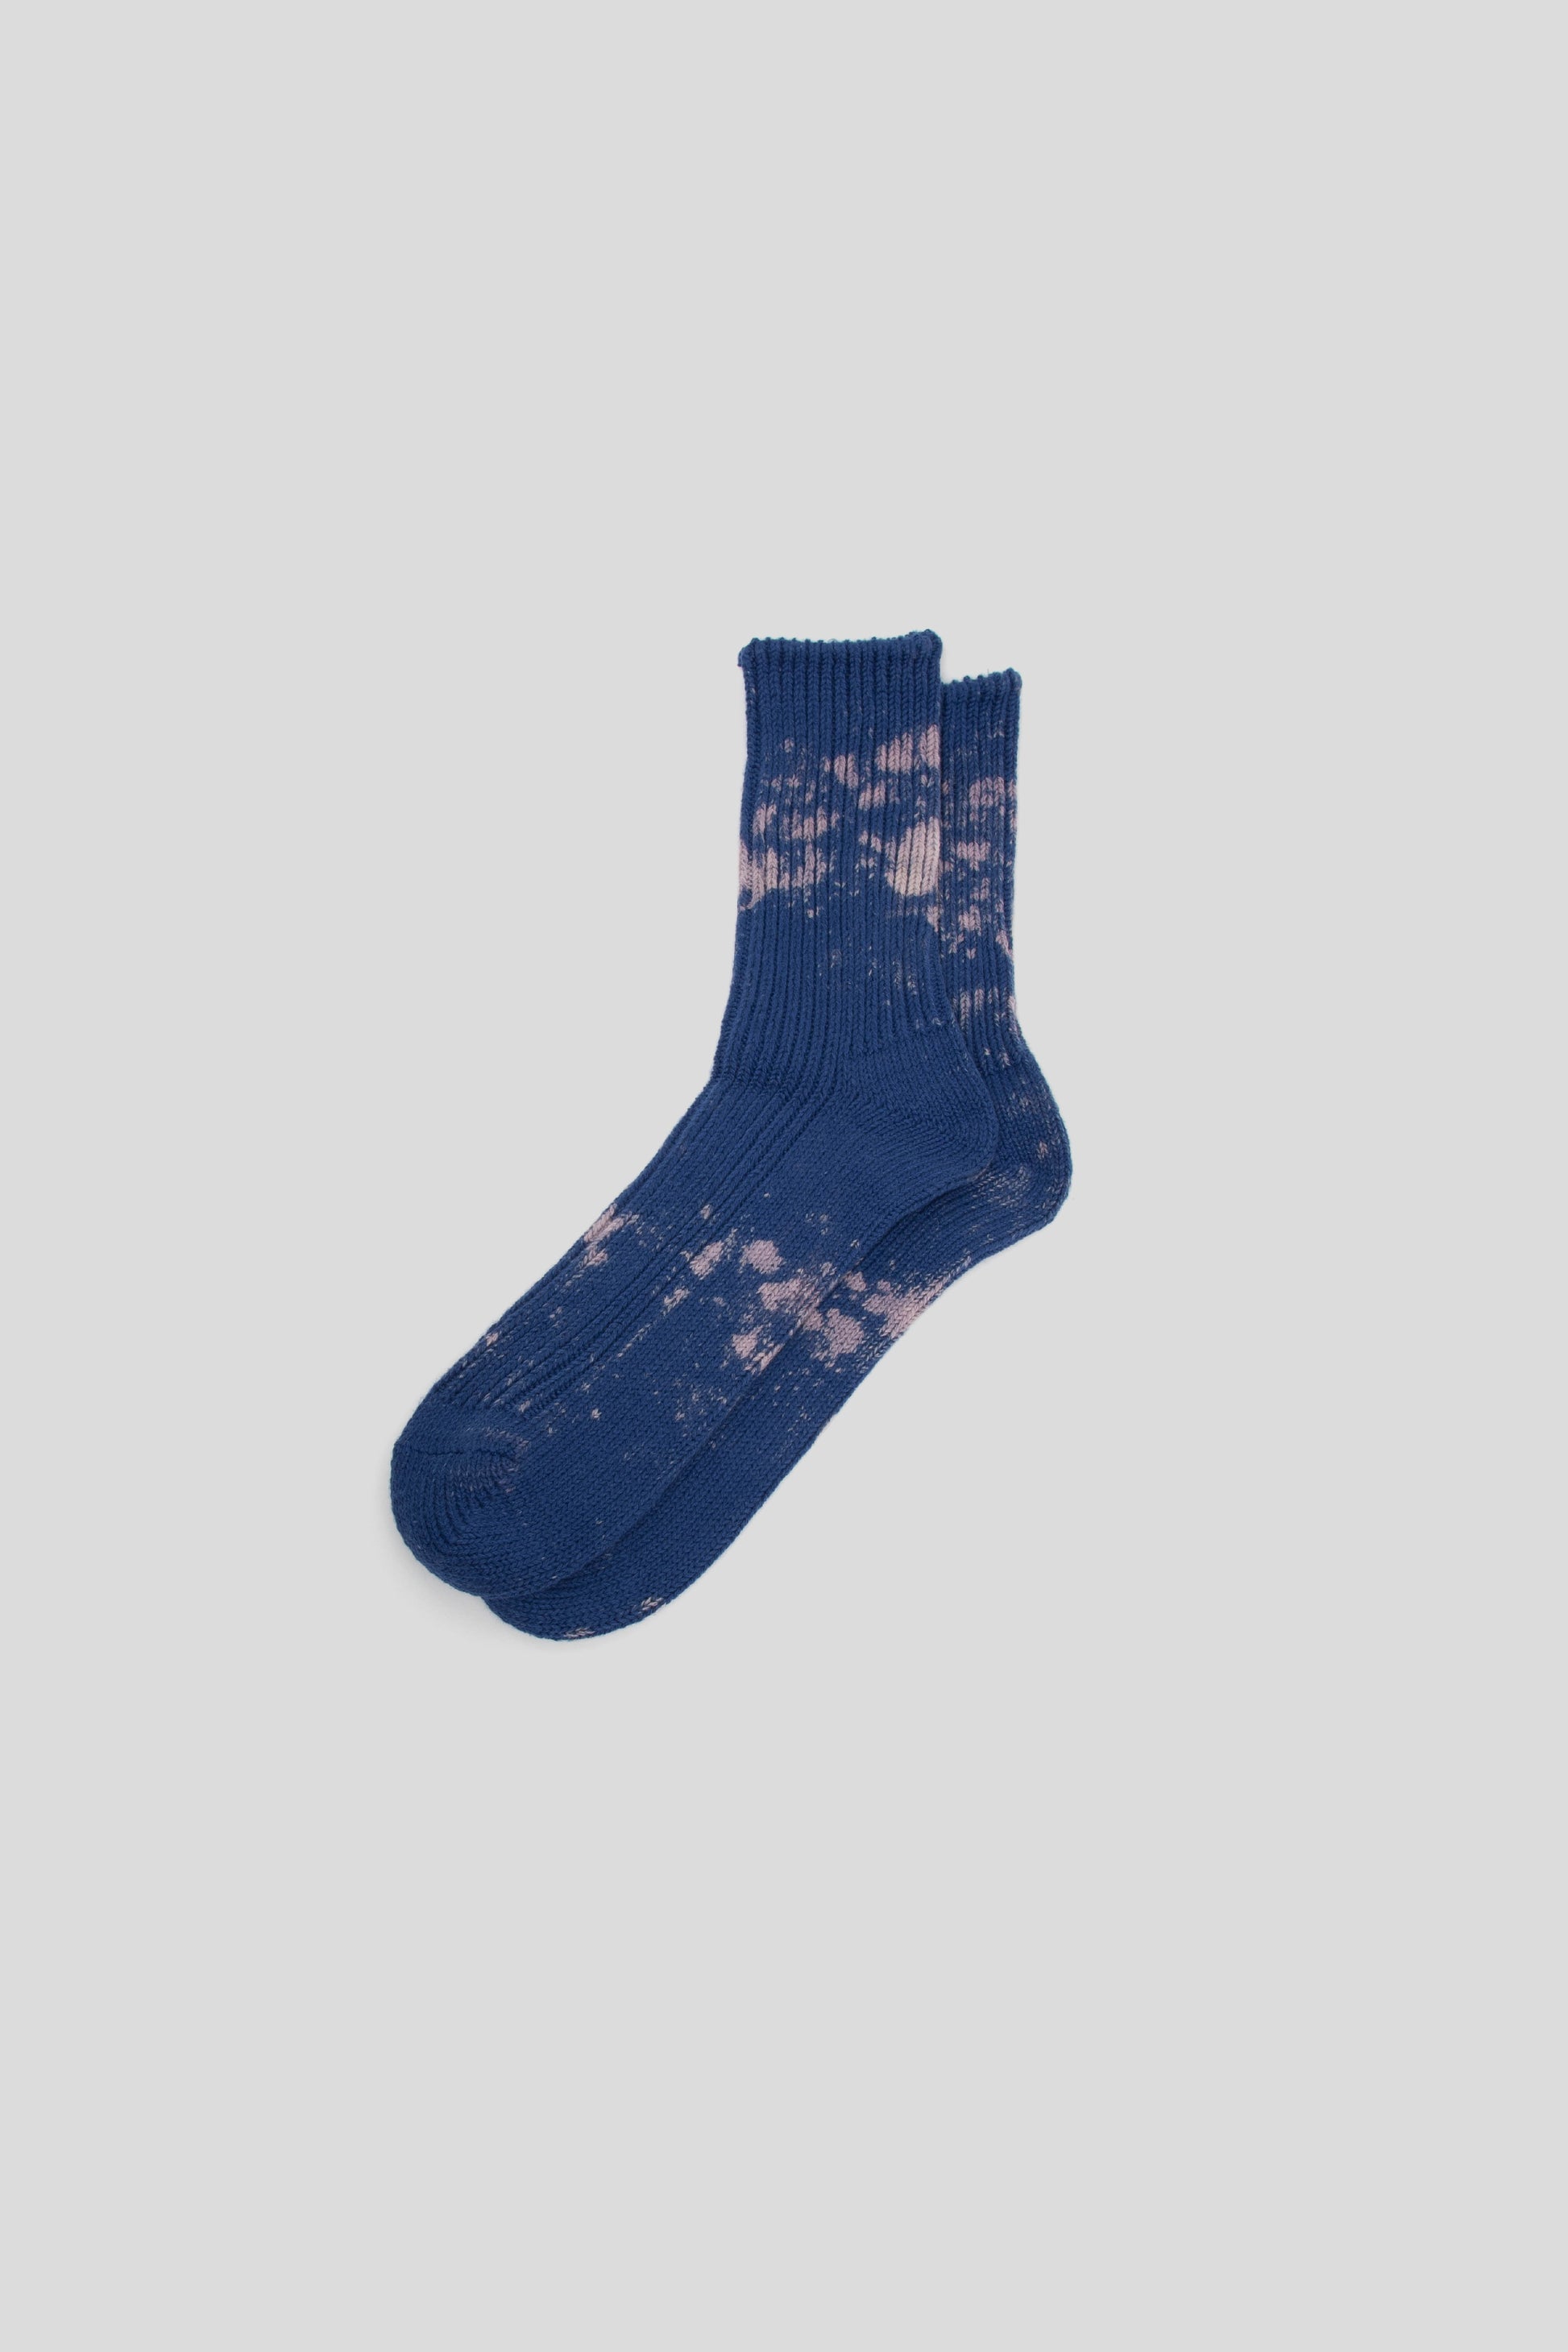 Rostersox BA Socks in Blue